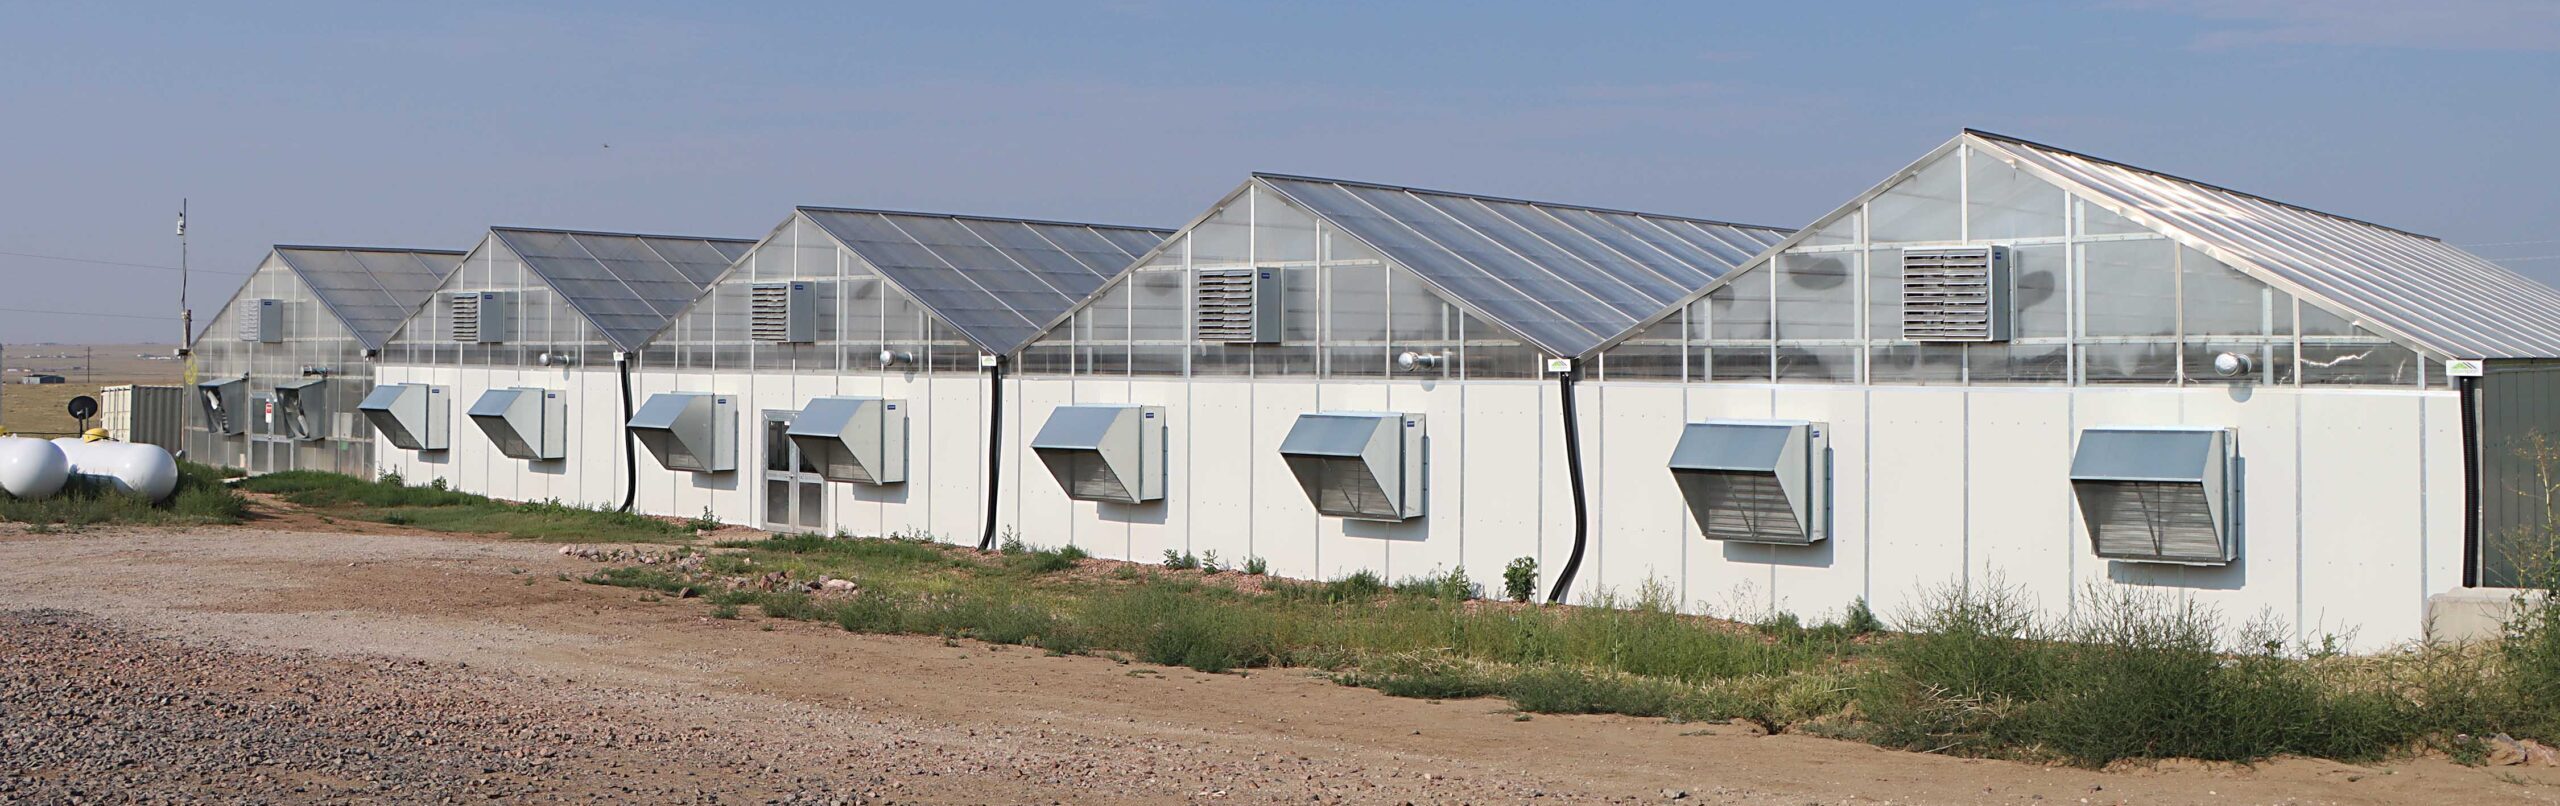 Exterior of S2000 Greenhouses Growing Hemp